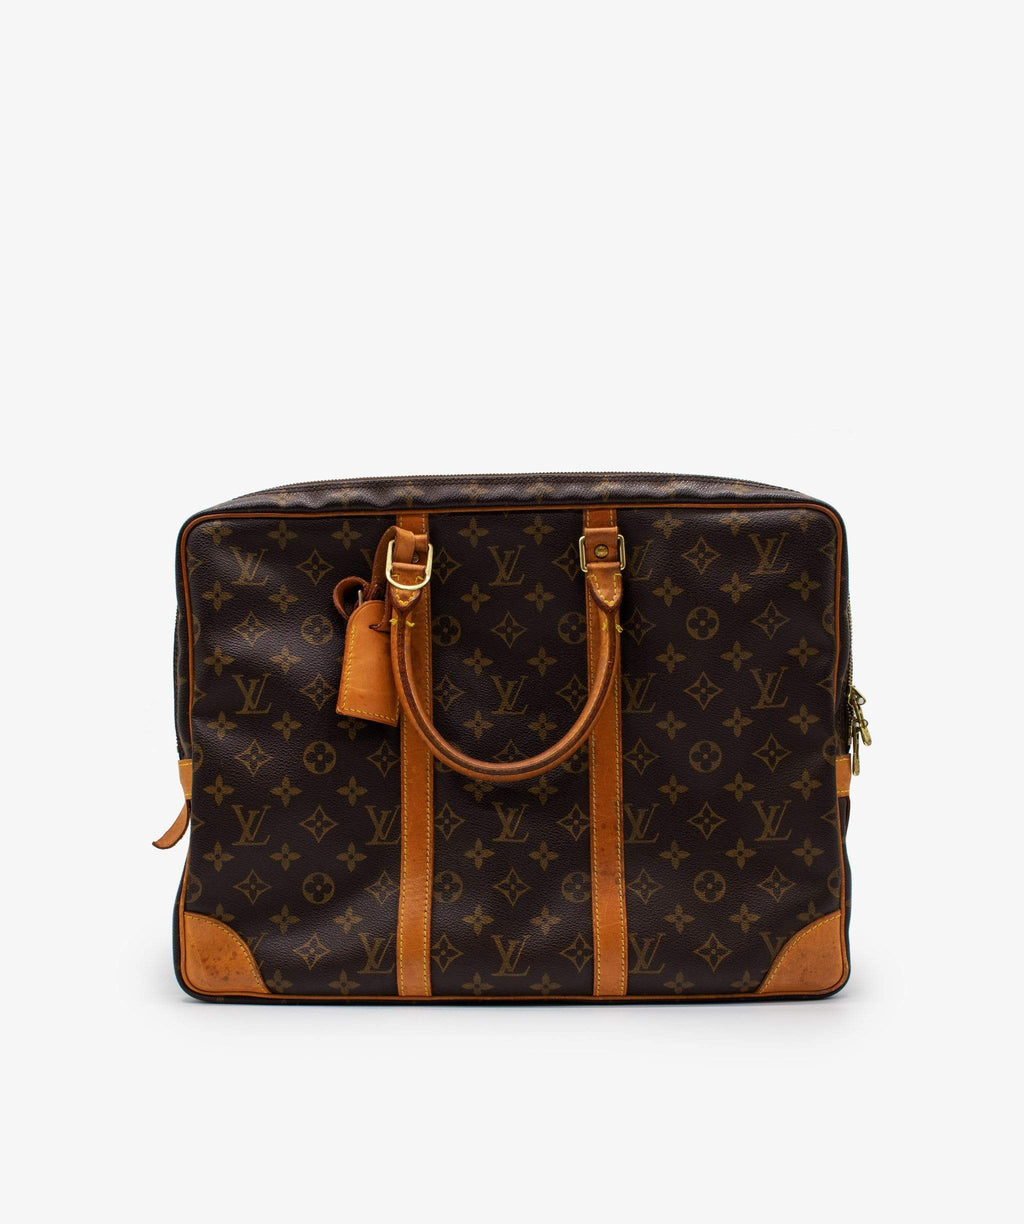 Porte documents voyage leather satchel Louis Vuitton Brown in